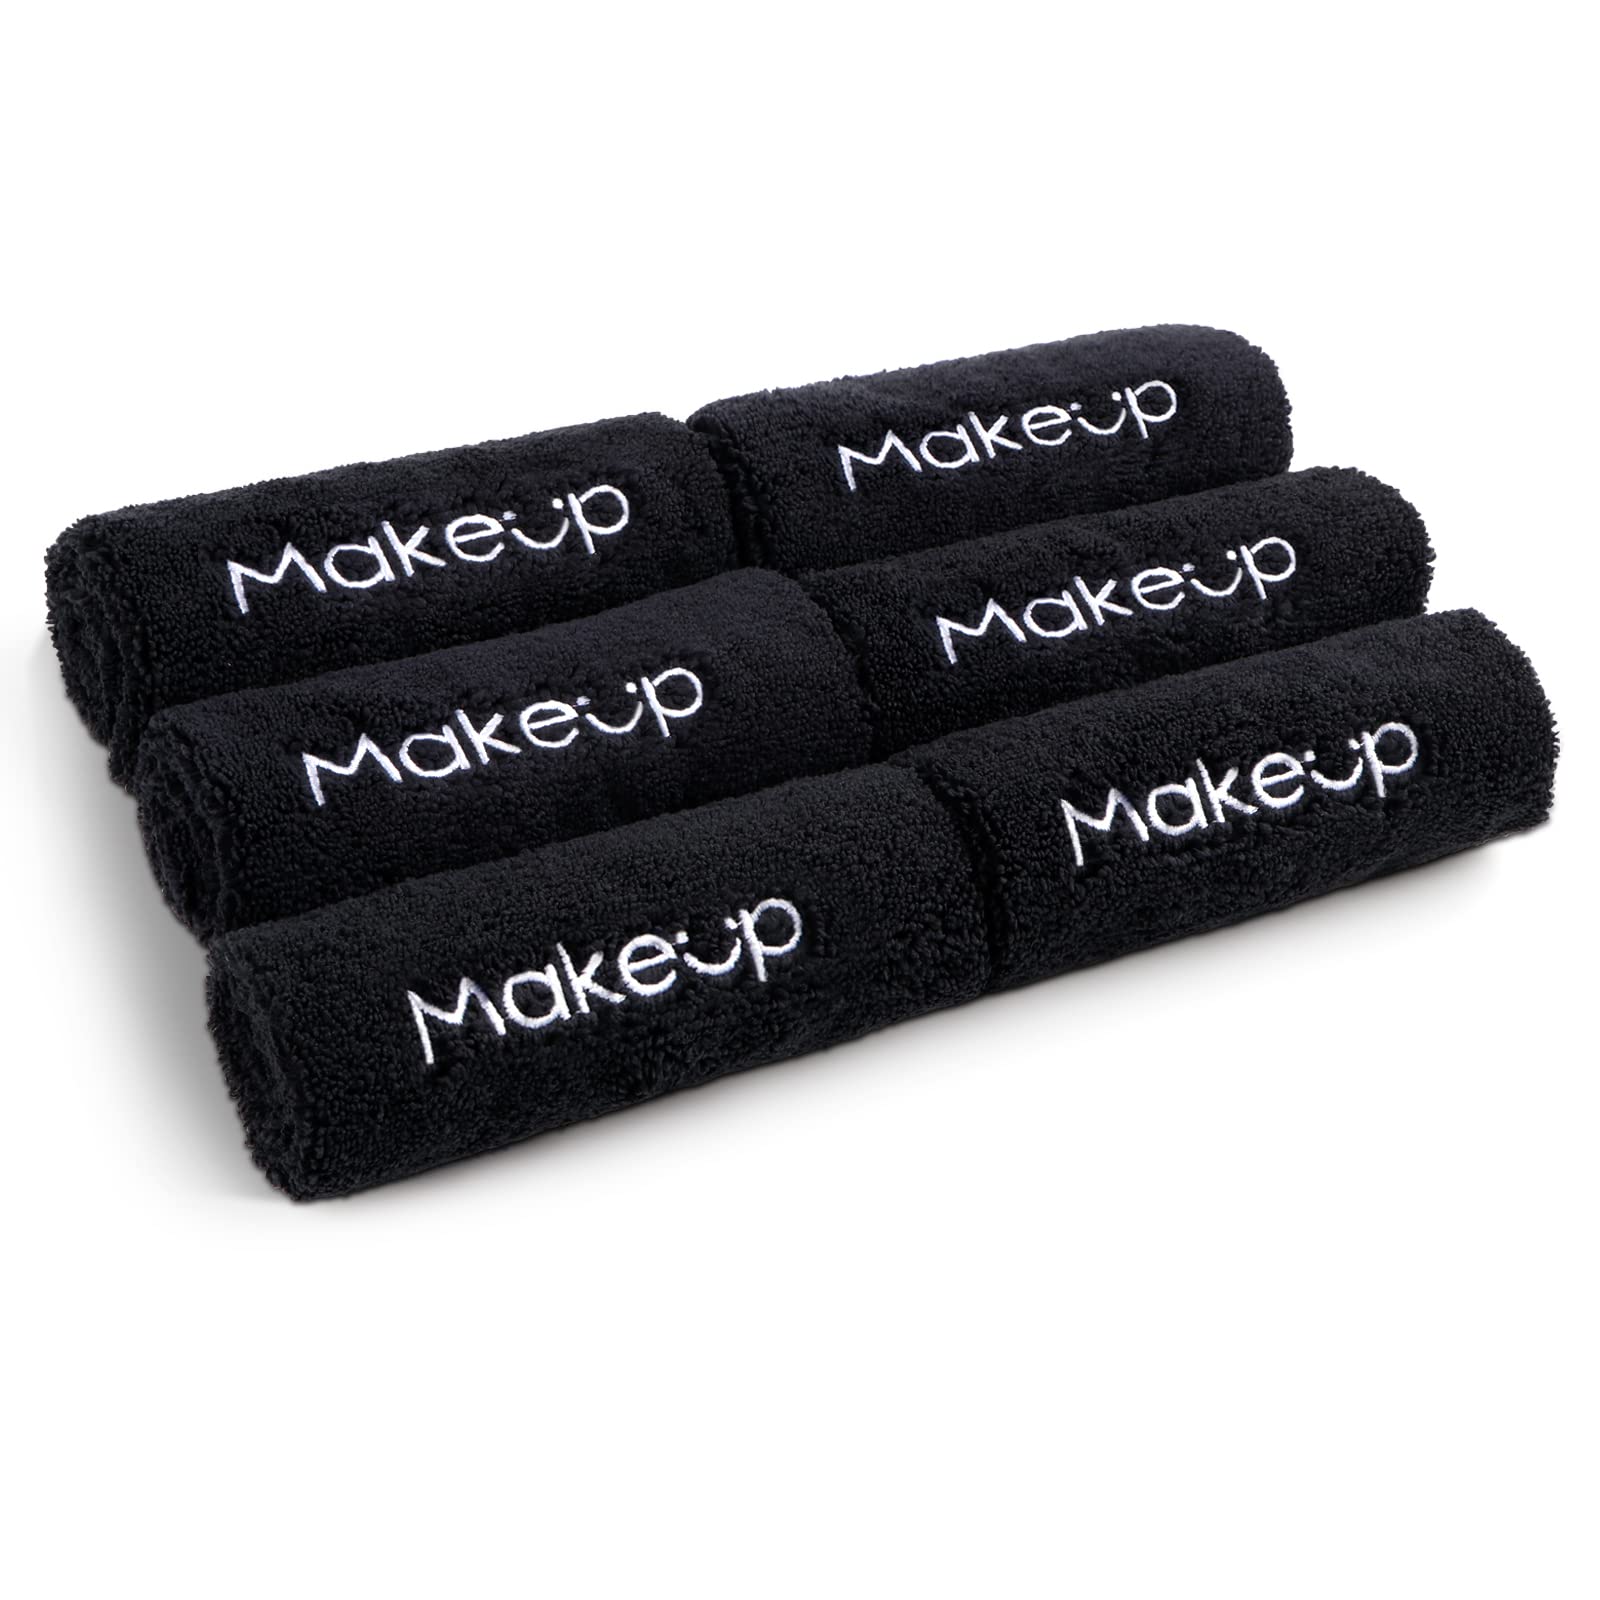 Makeup Removal Washcloth 13x13 Black 6 Pack